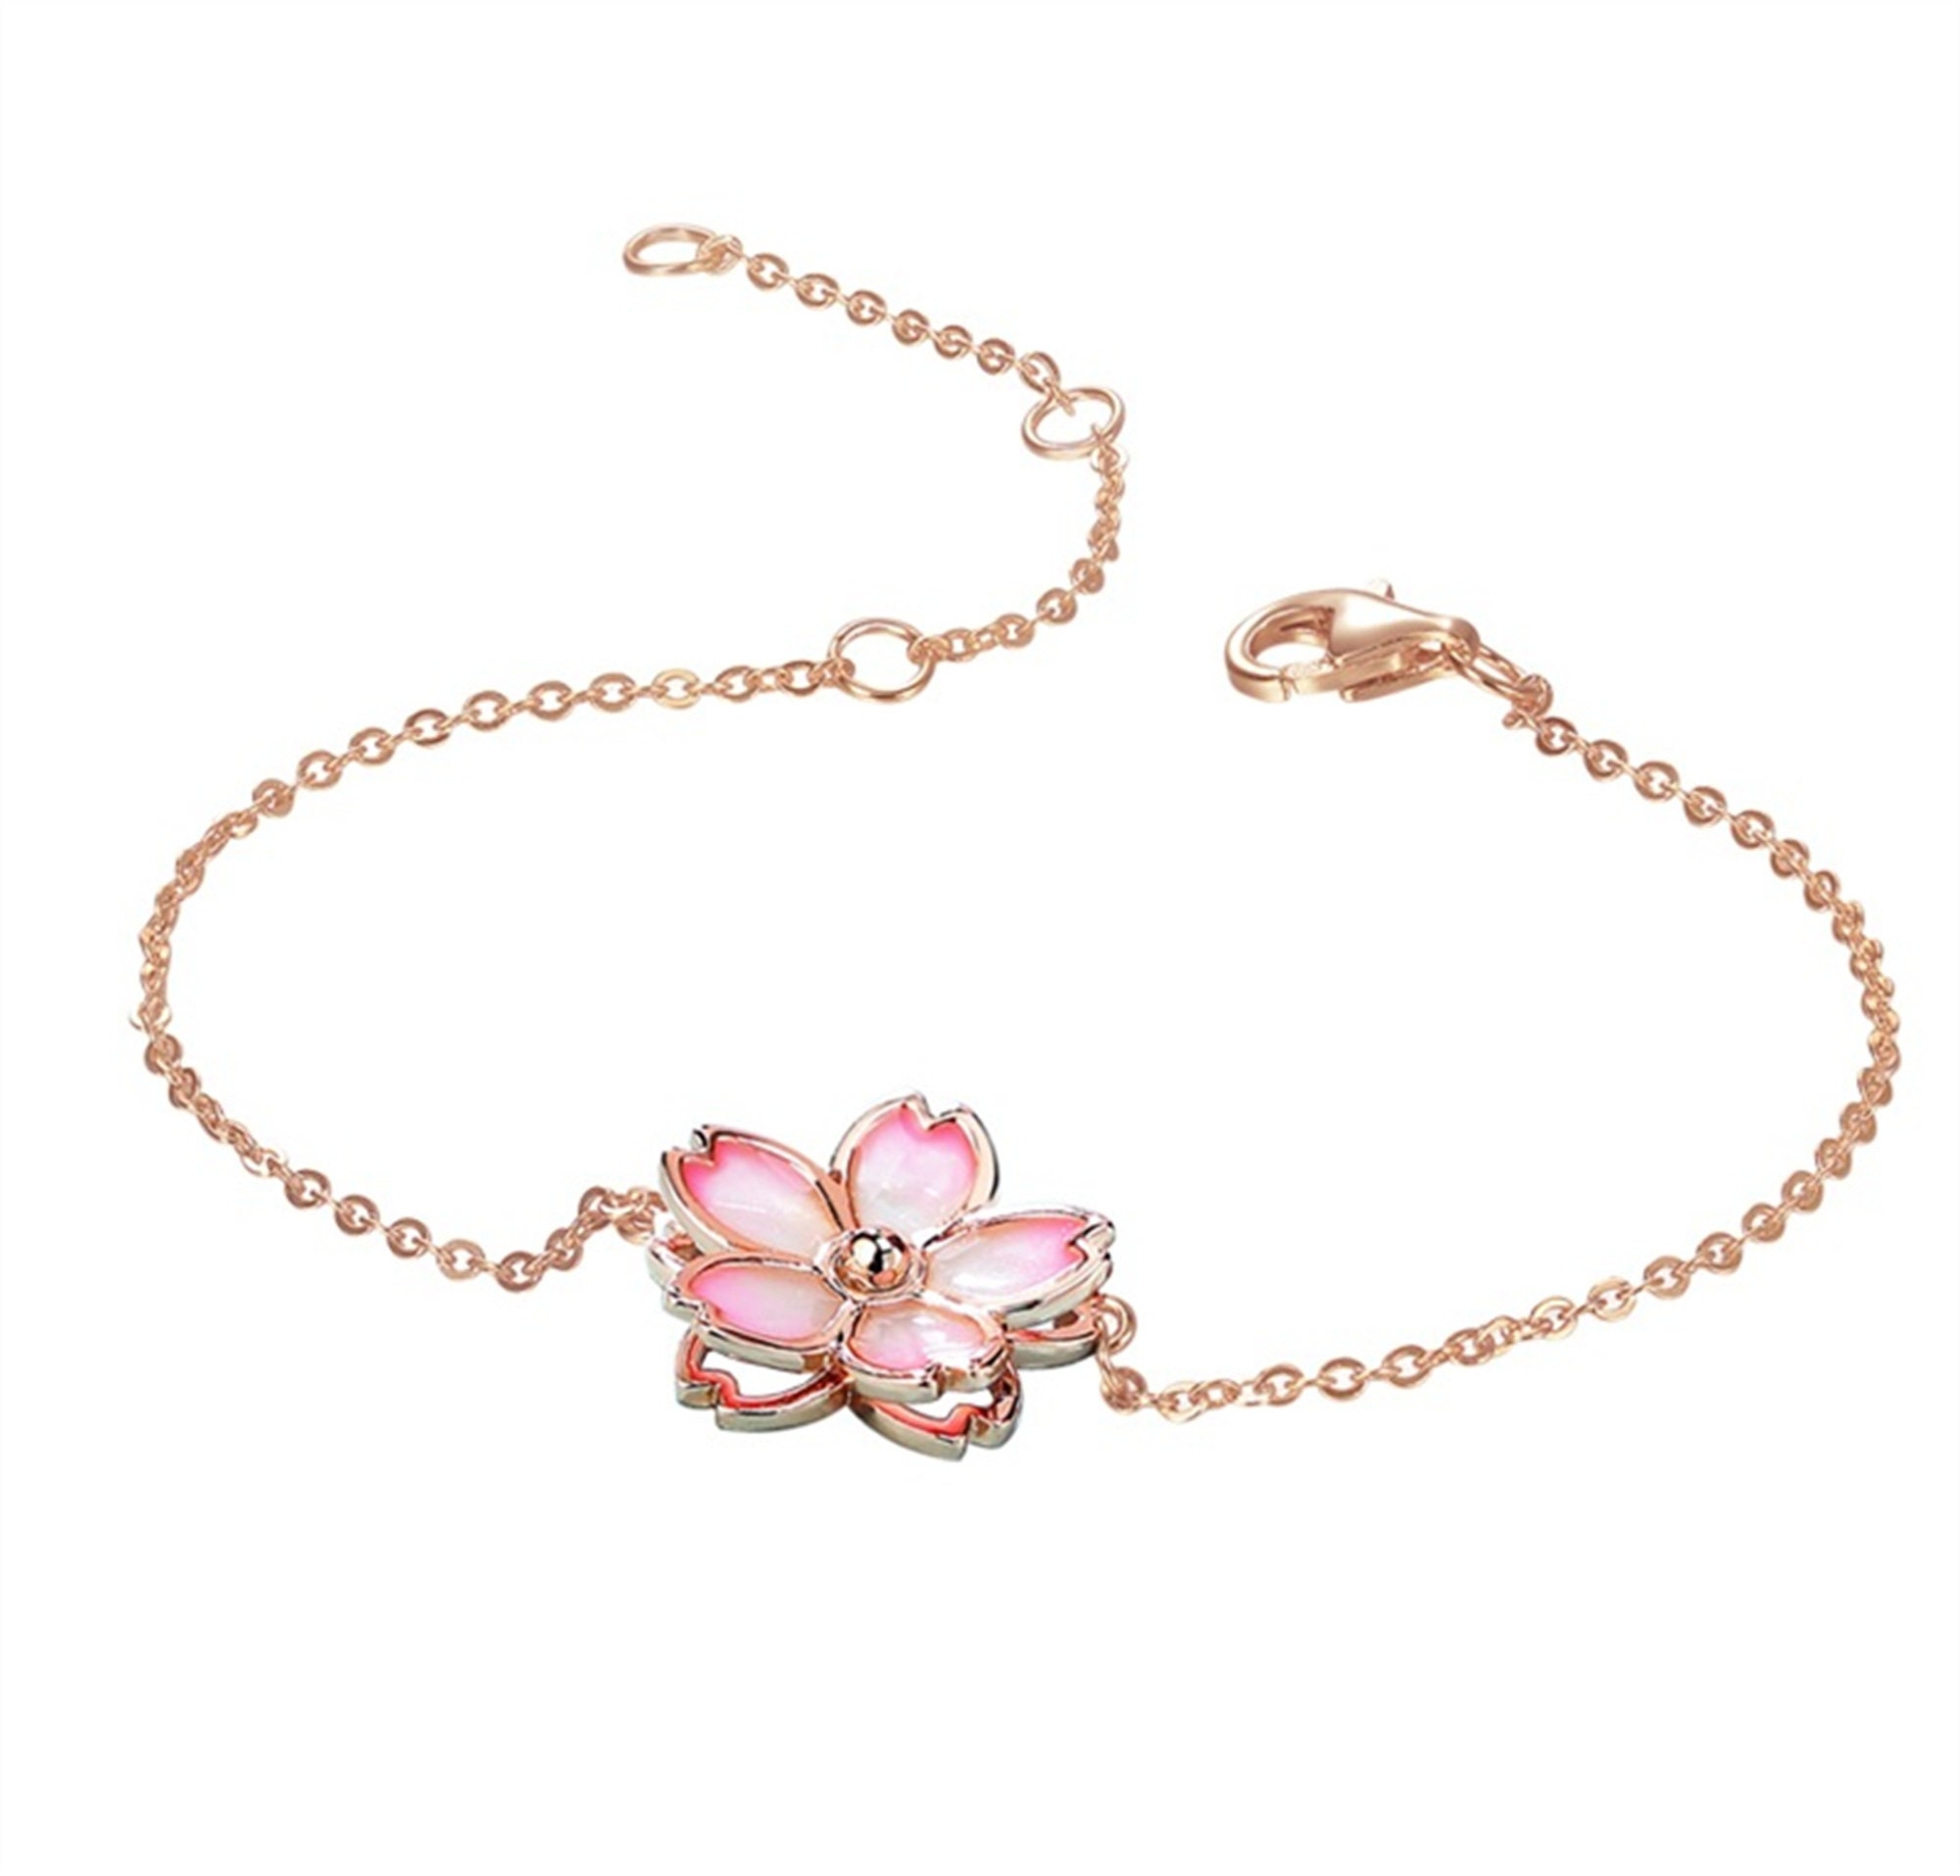 Cherry Blossom Anxiety Necklace Sakura Flower Pendant Stress 